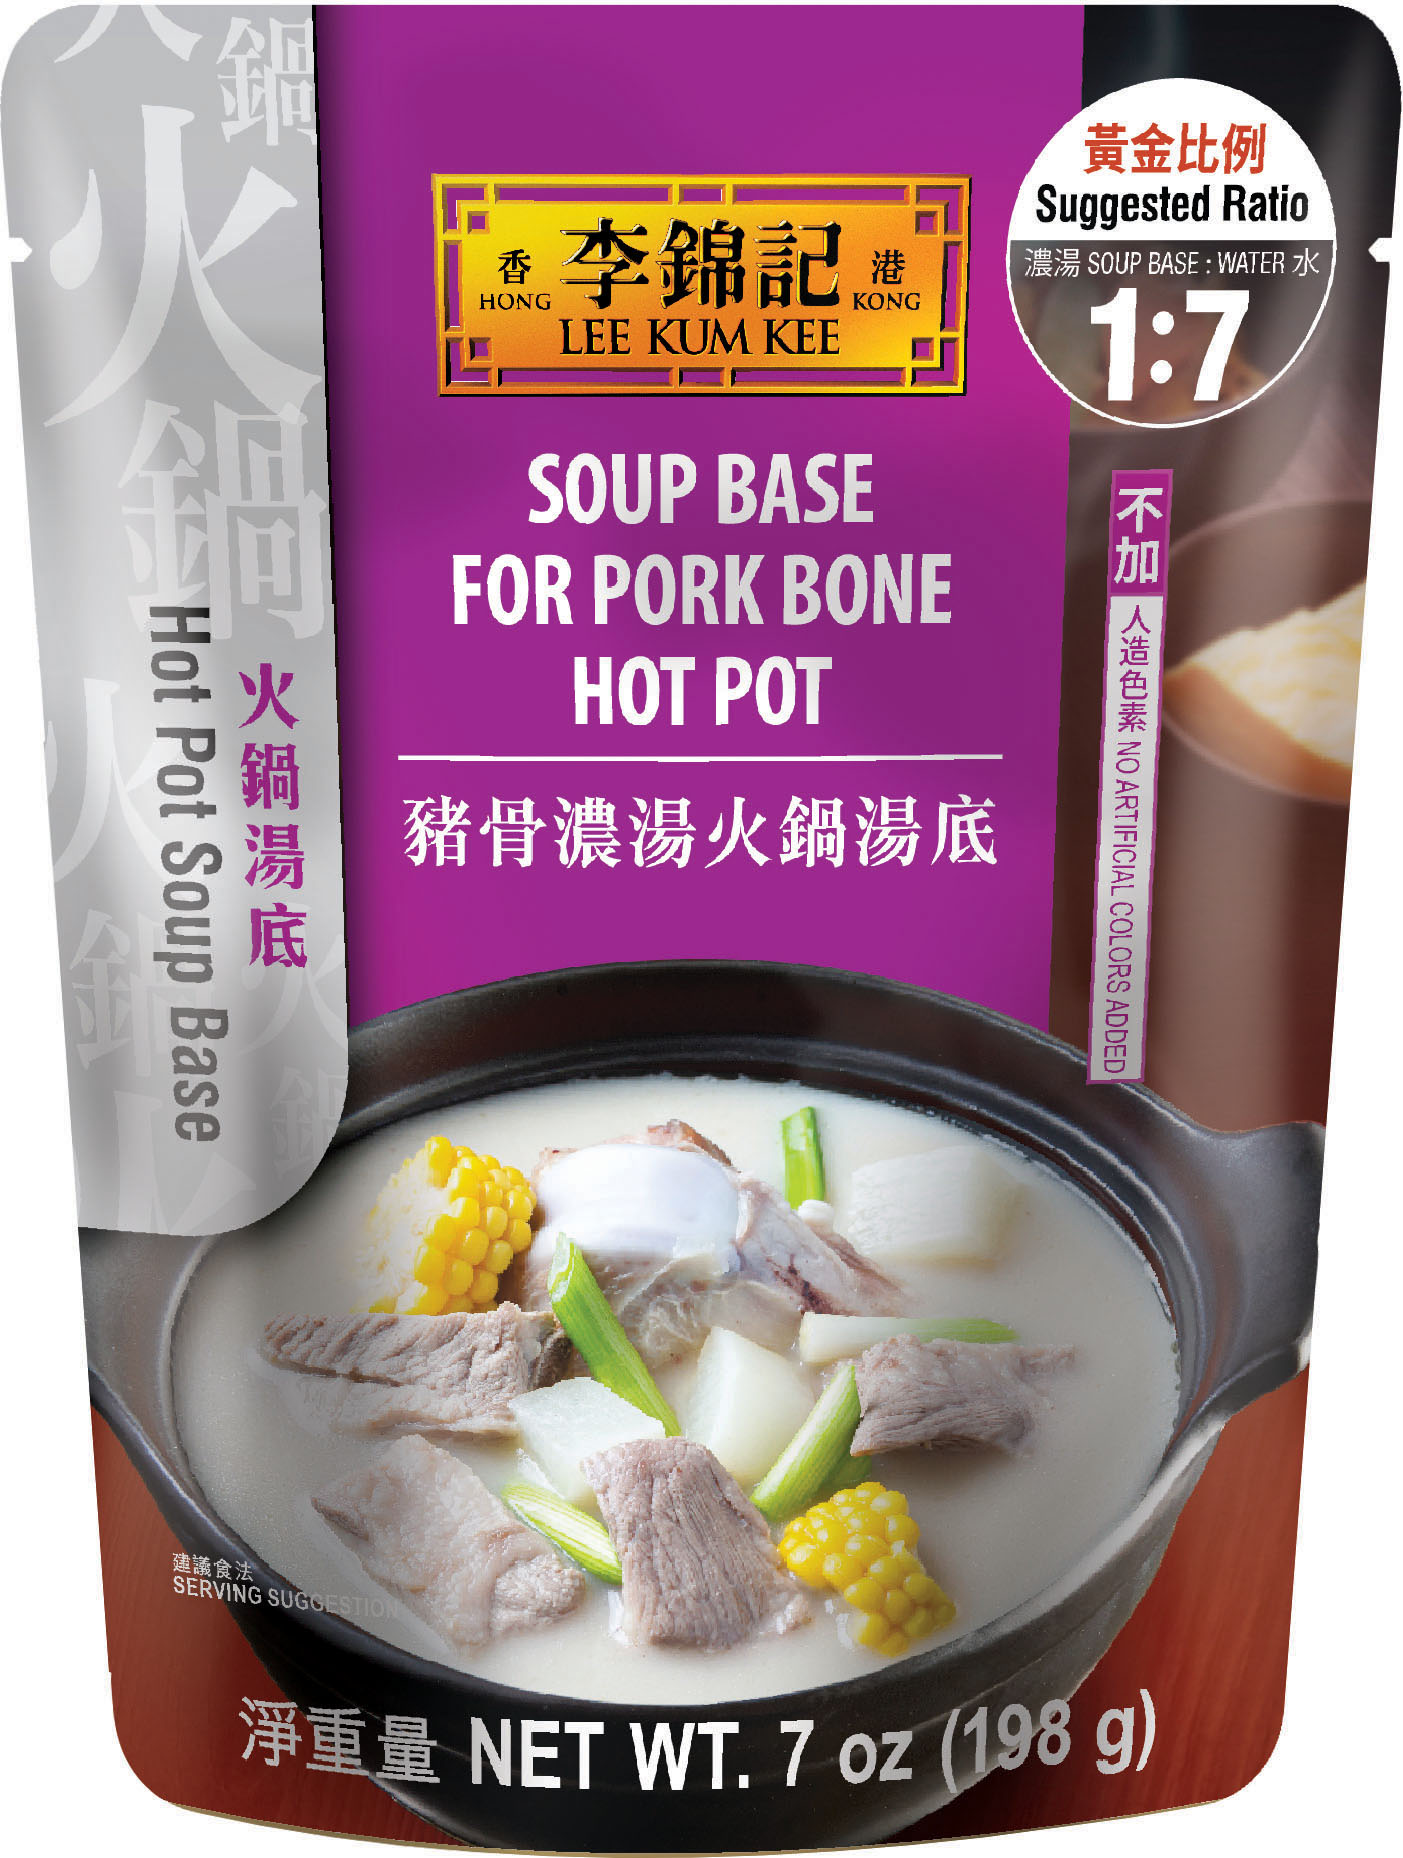 Soup Base for Pork Bone Hot Pot, 7 oz (198 g), Soup Pack